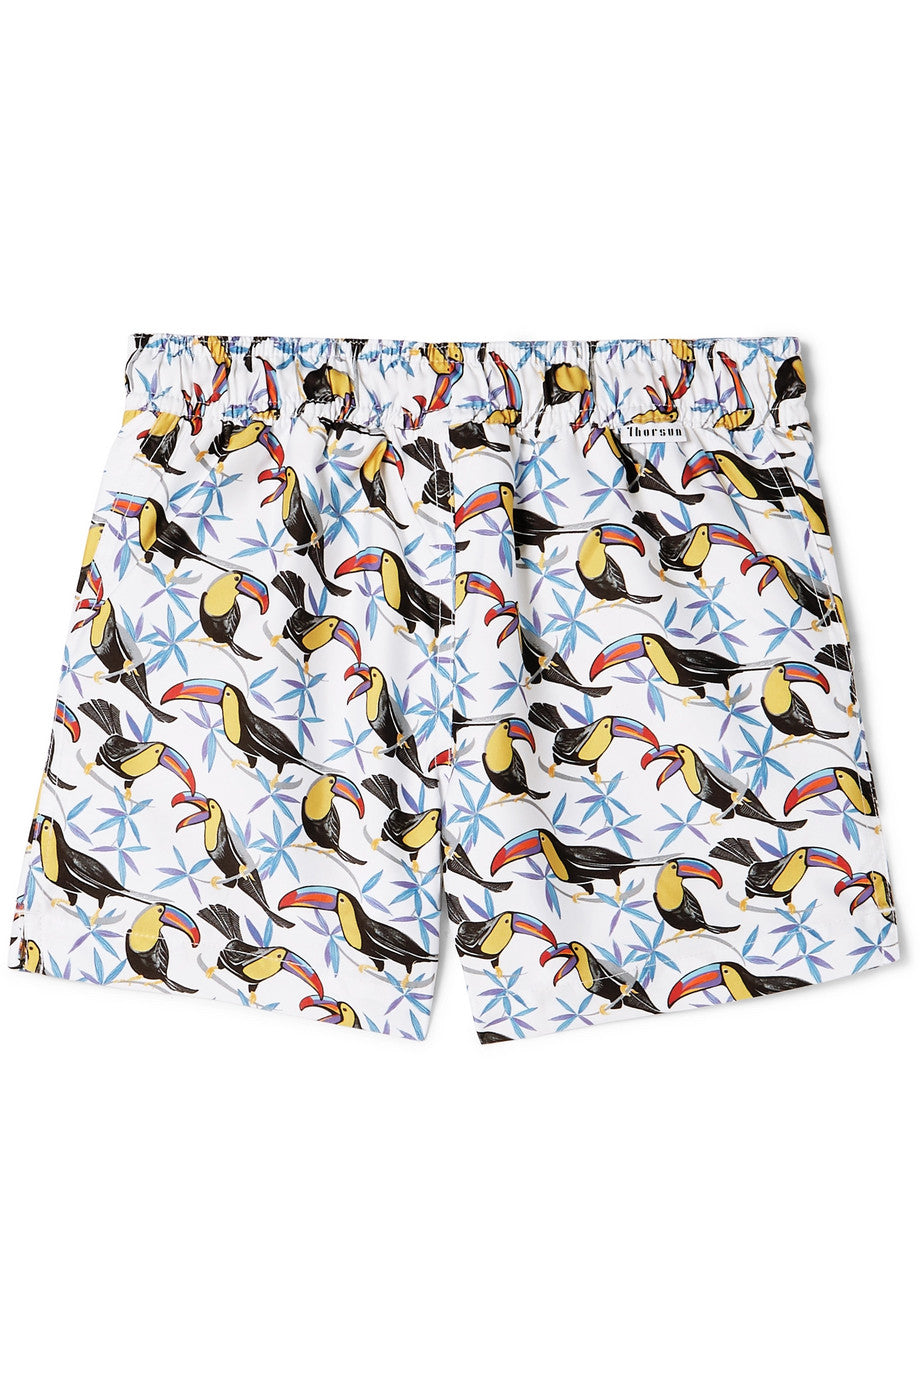 Zeus - Toucan printed swim shorts - Thorsun